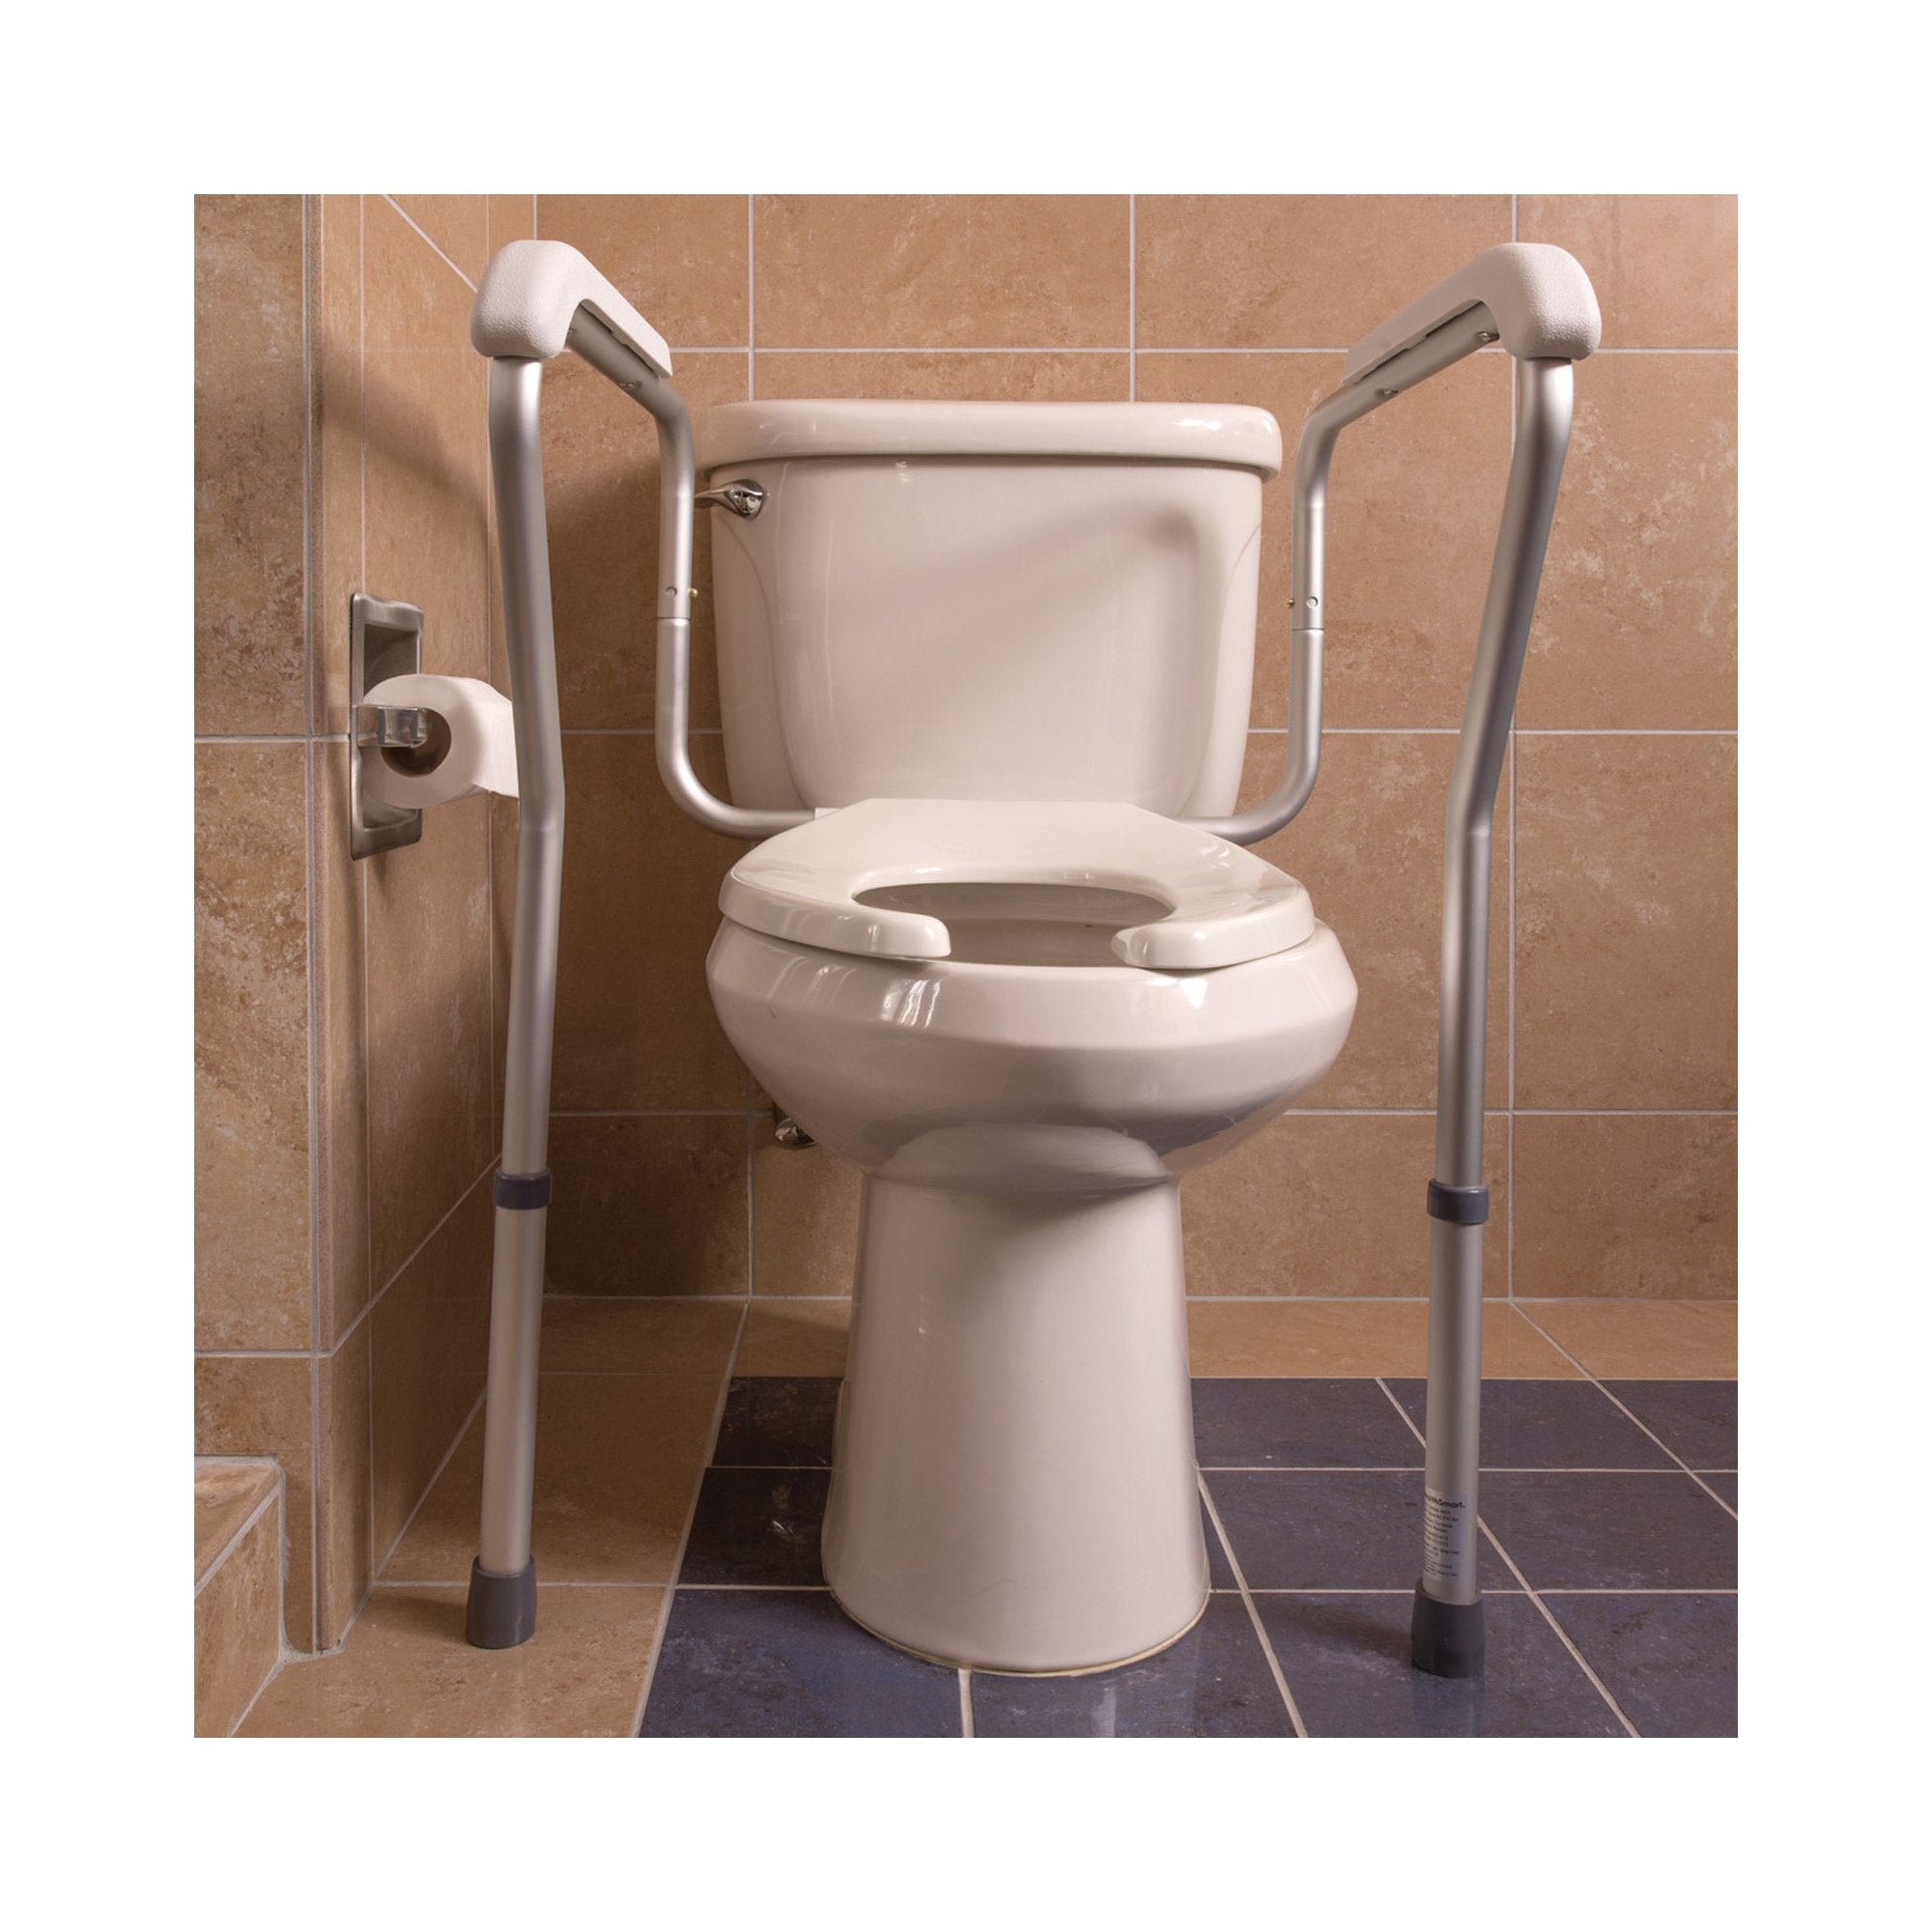 Toilet Safety Rail HealthSmart White / Silver Aluminum